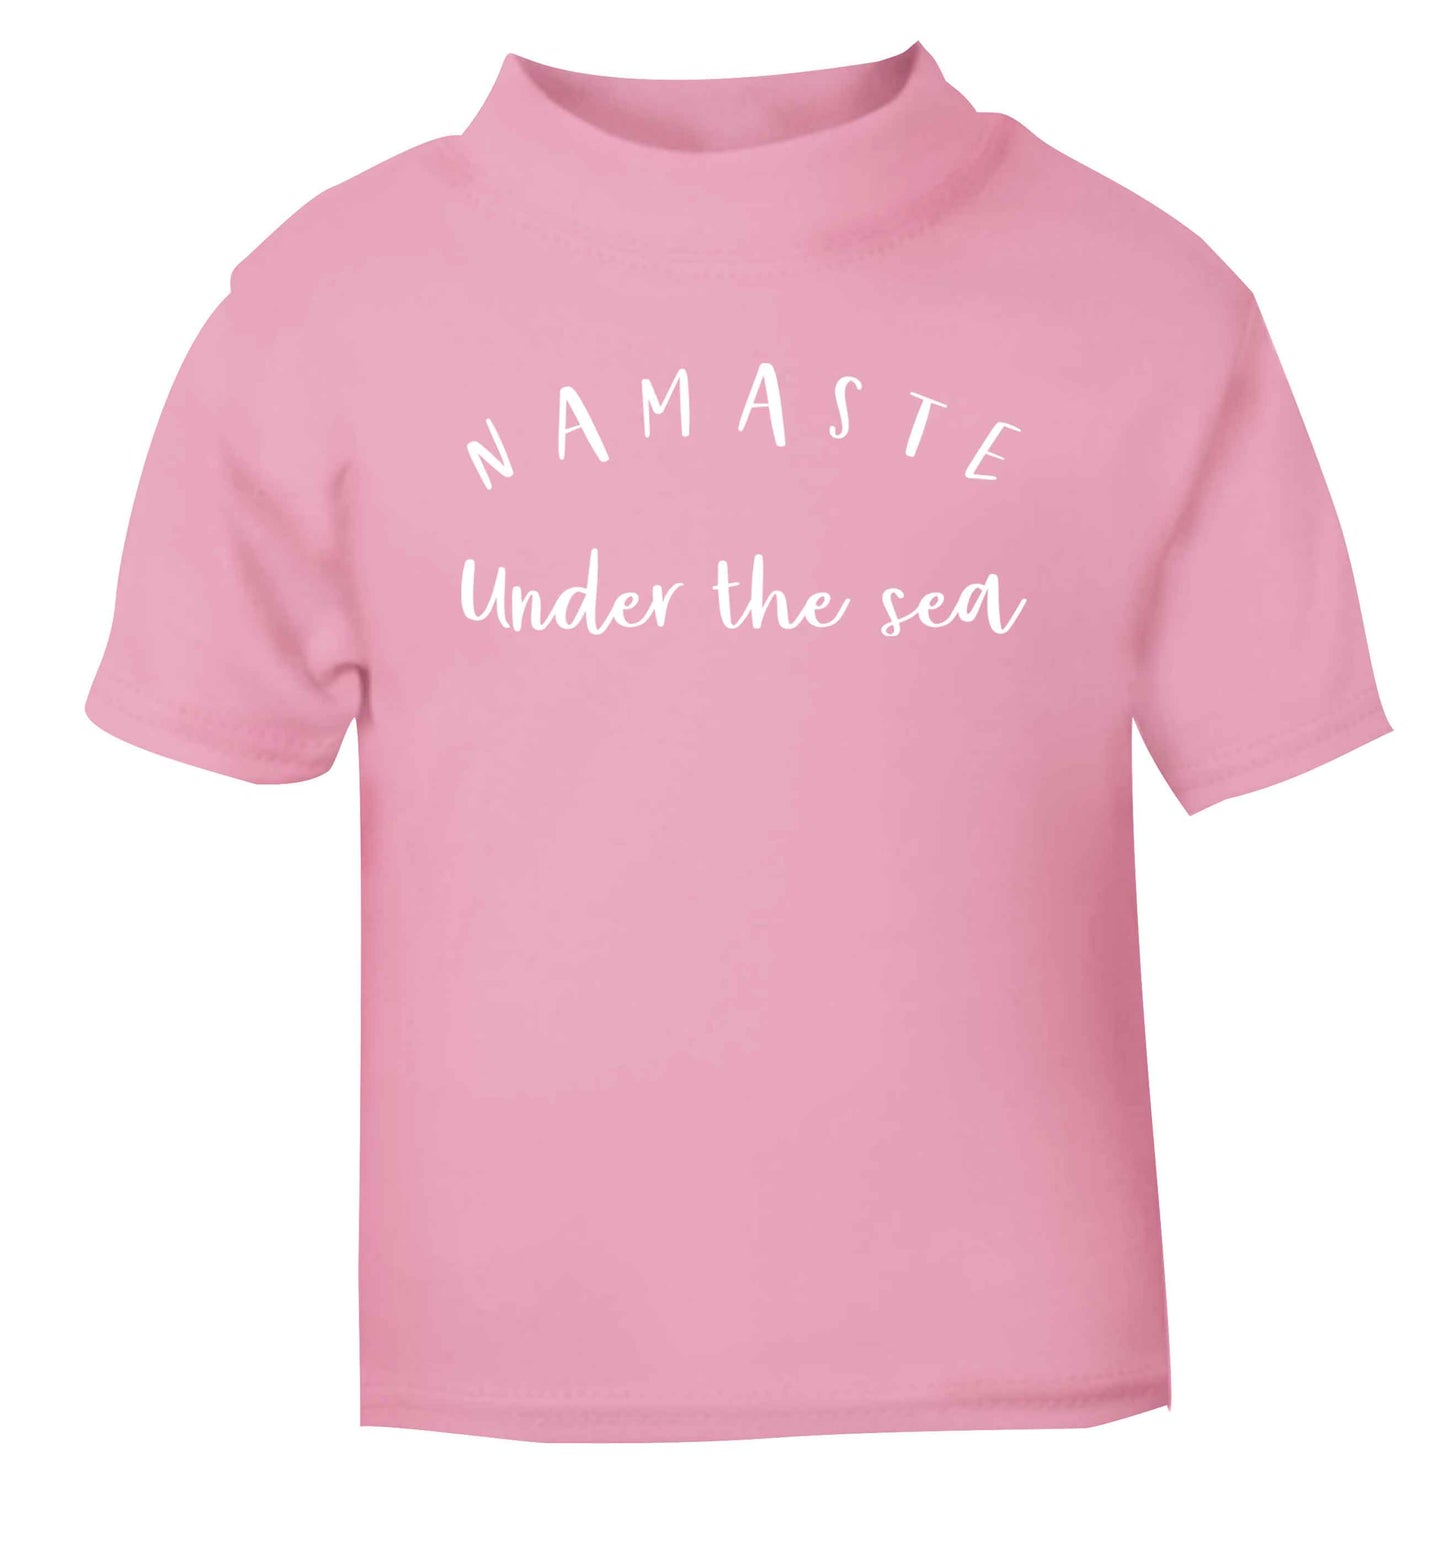 Namaste under the water light pink Baby Toddler Tshirt 2 Years